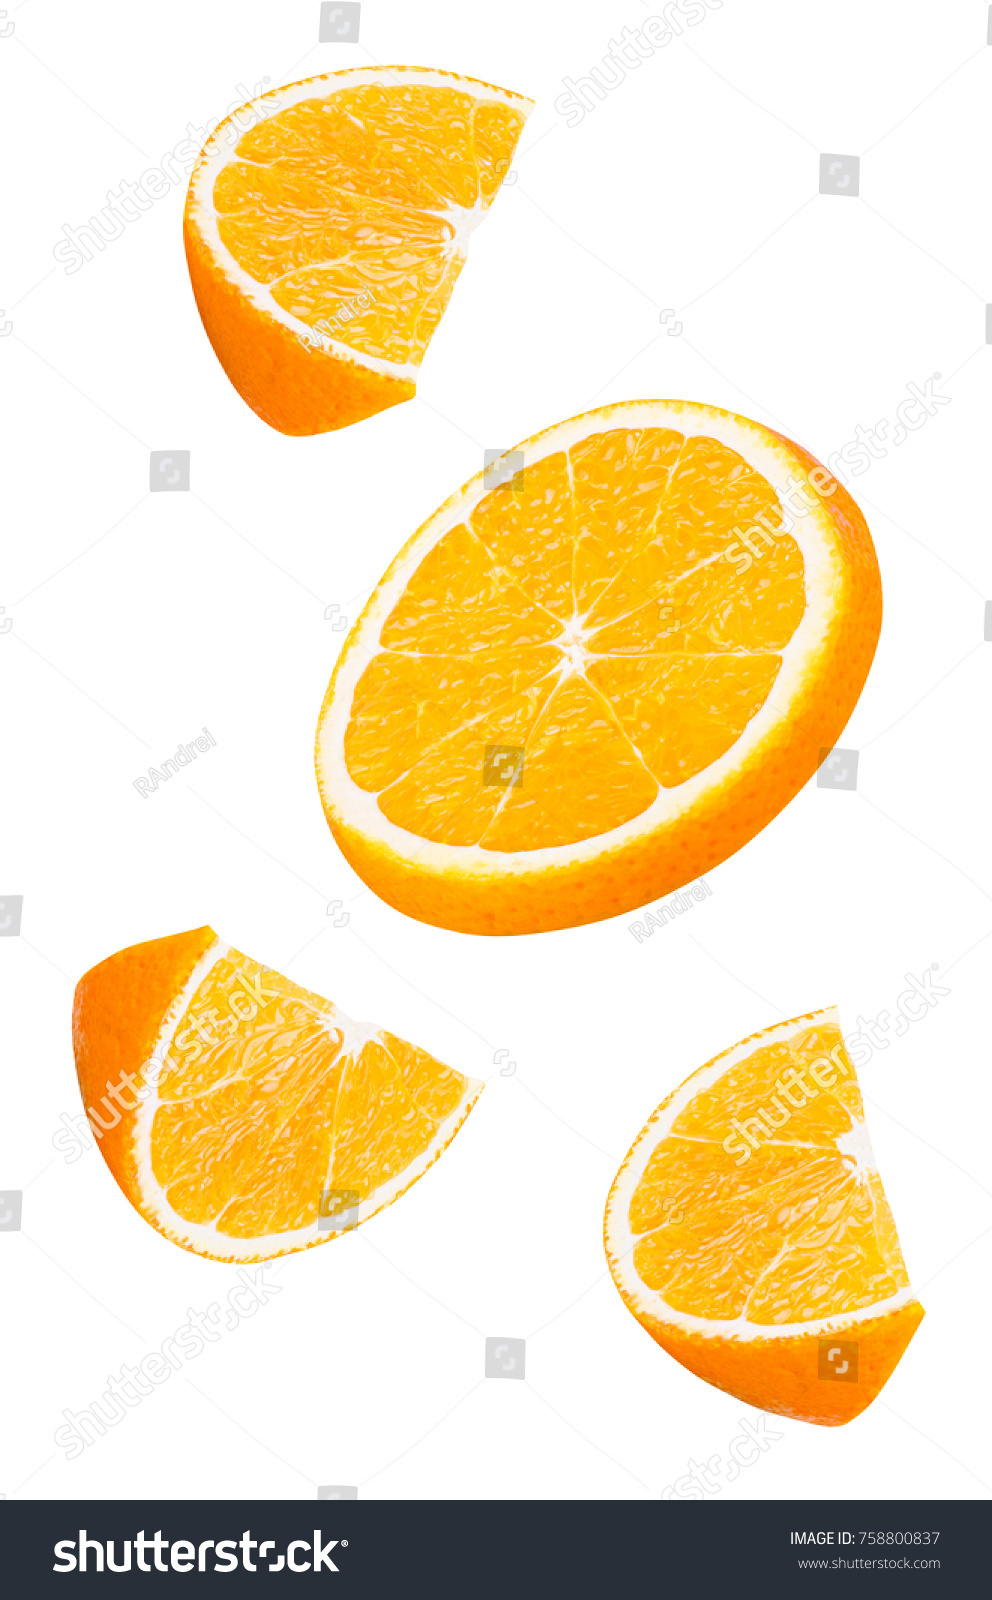 6,430 Orange slice falling isolated Images, Stock Photos & Vectors ...